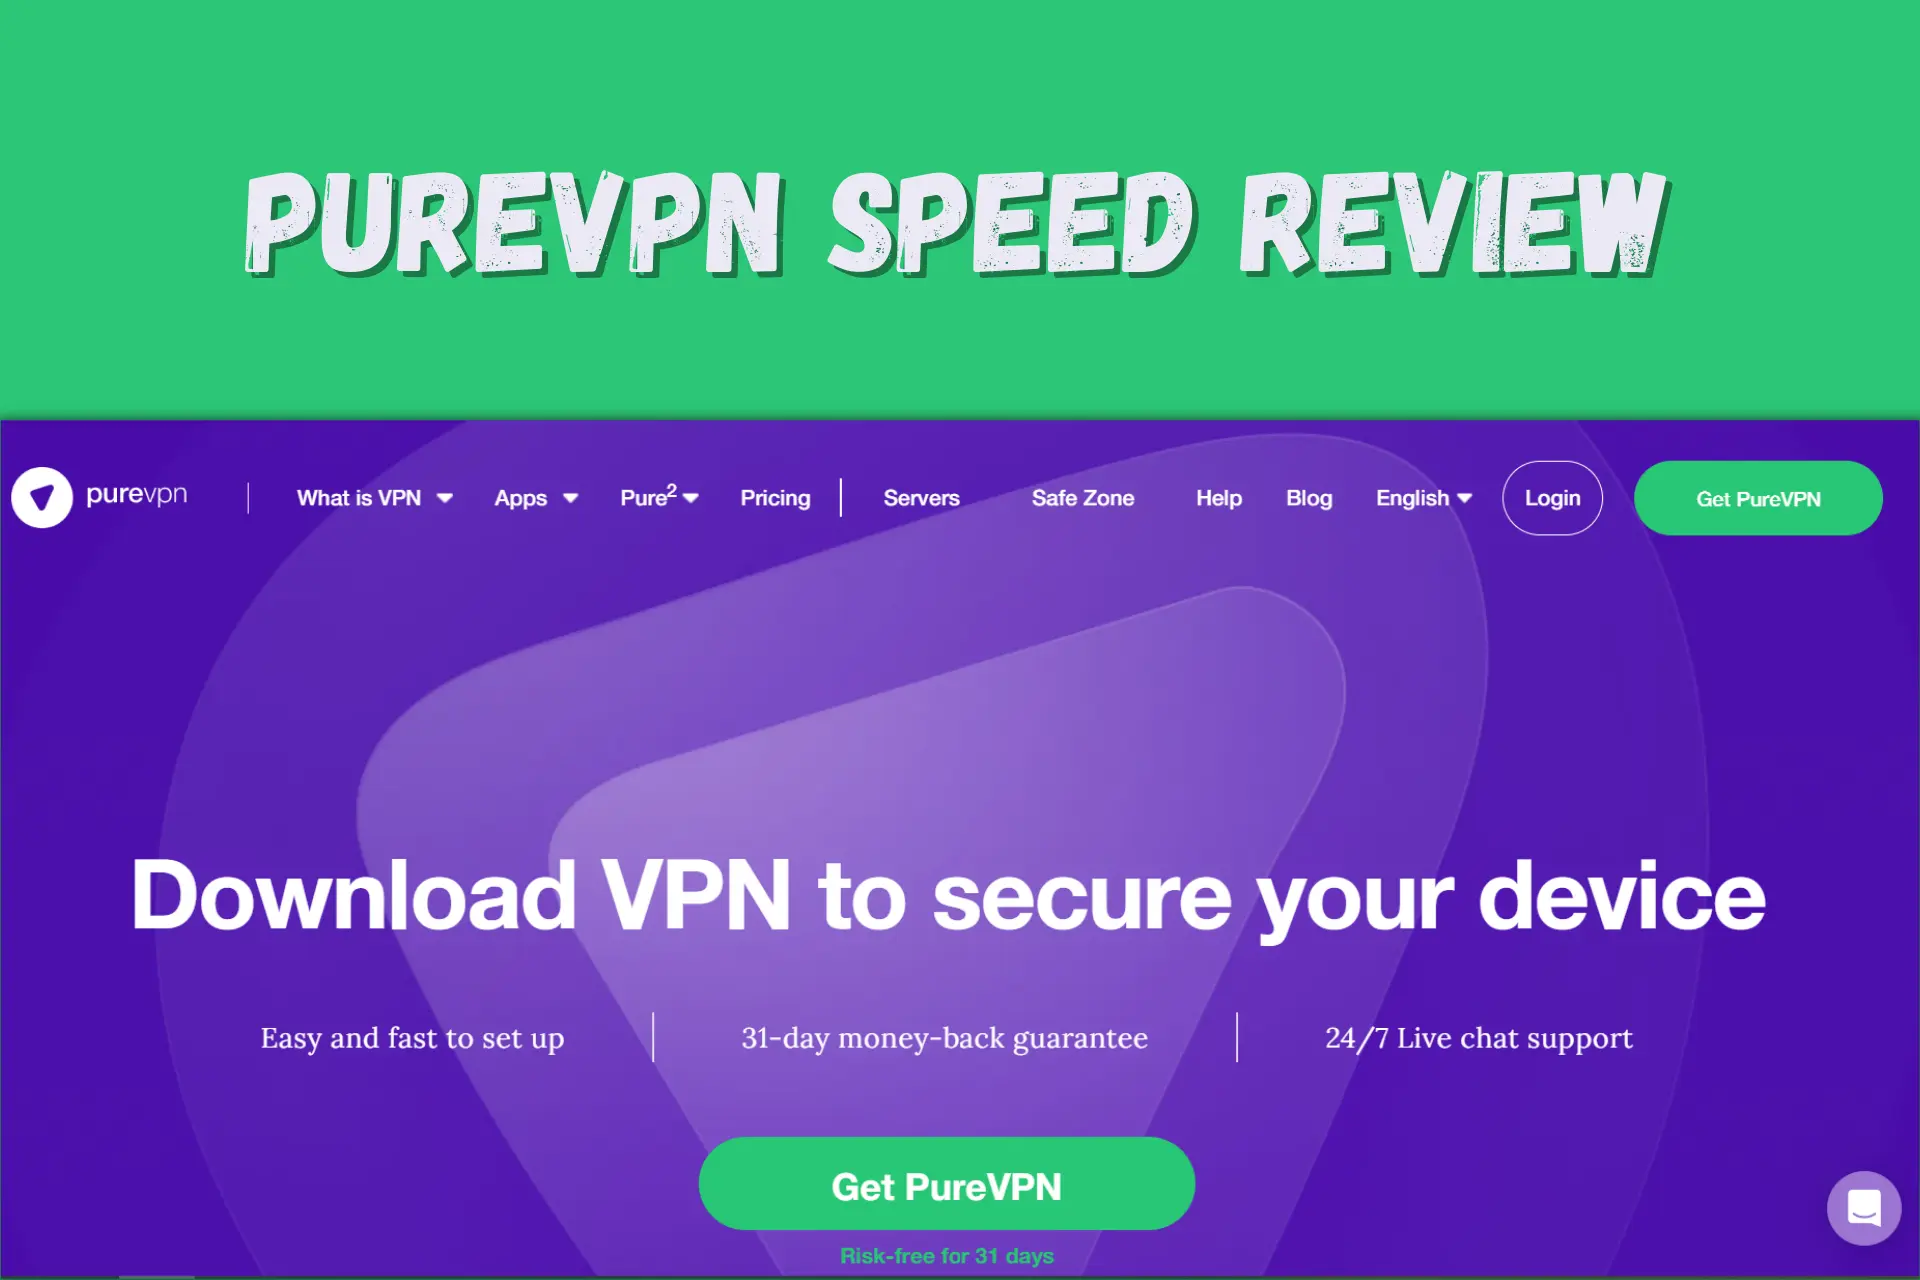 PureVPN speed review